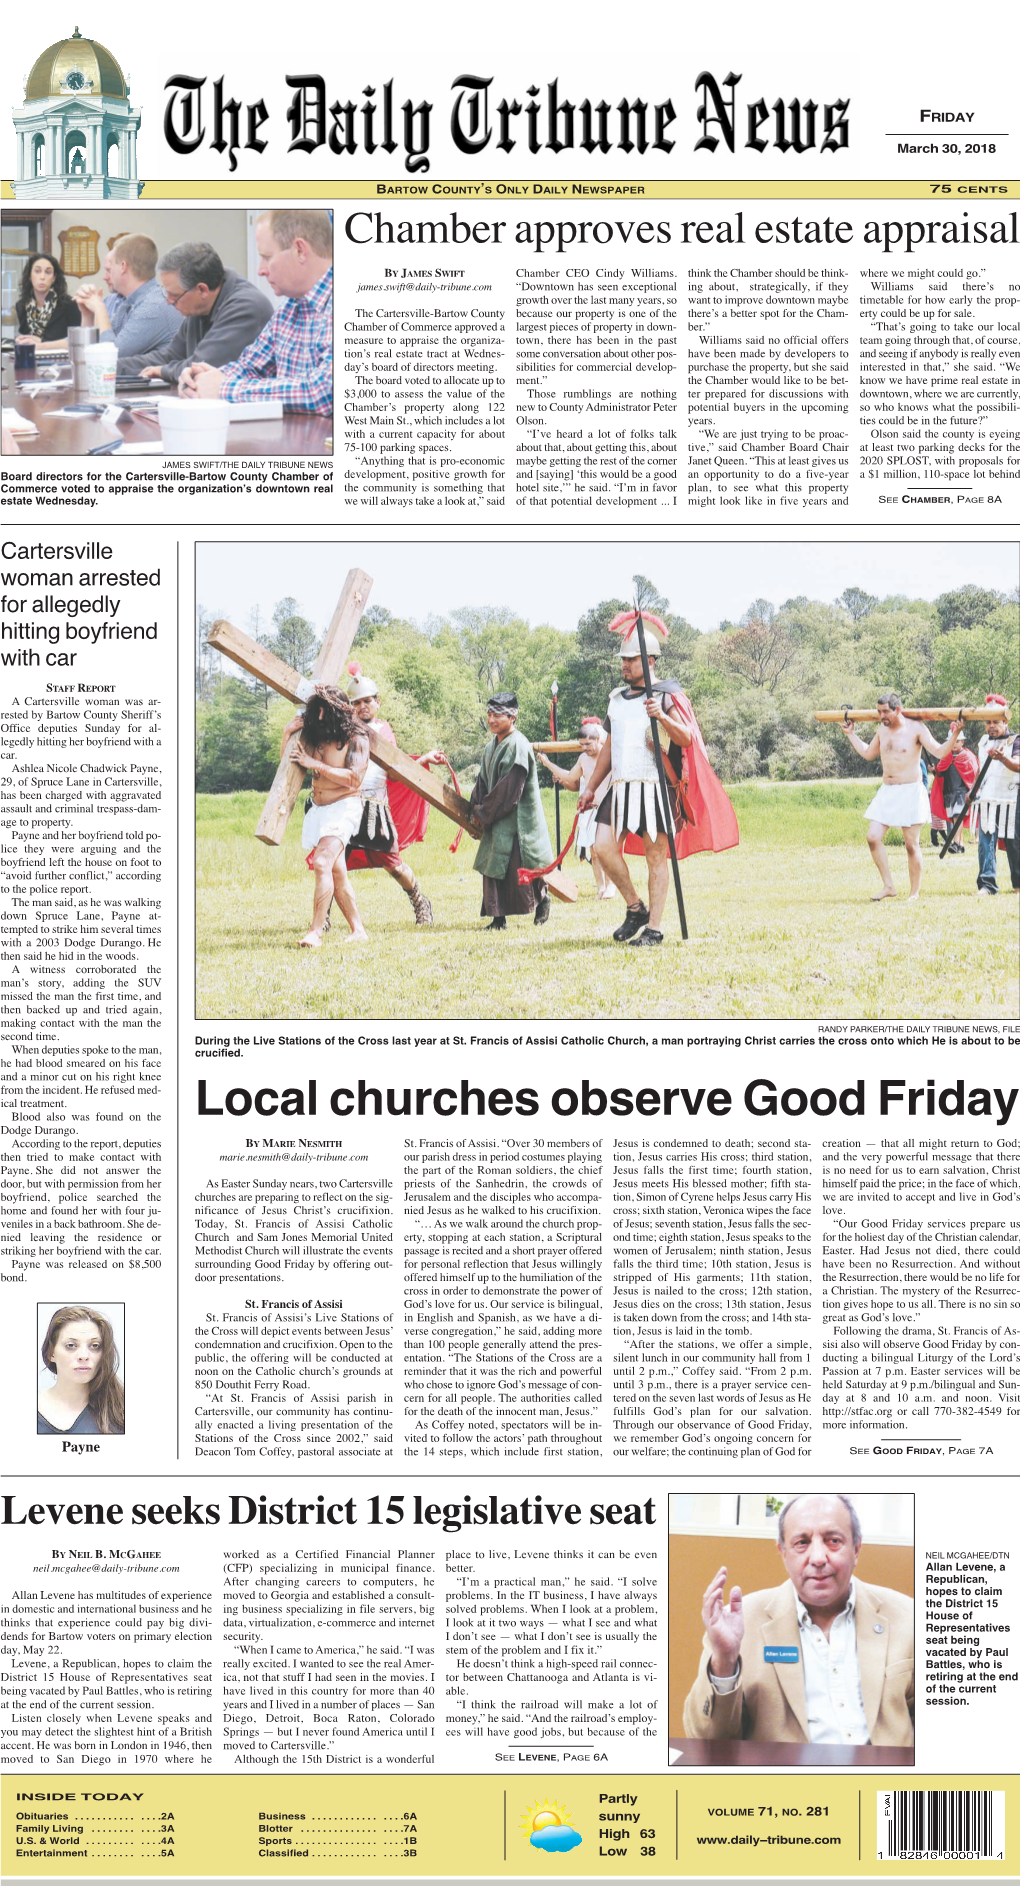 Local Churches Observe Good Friday Dodge Durango